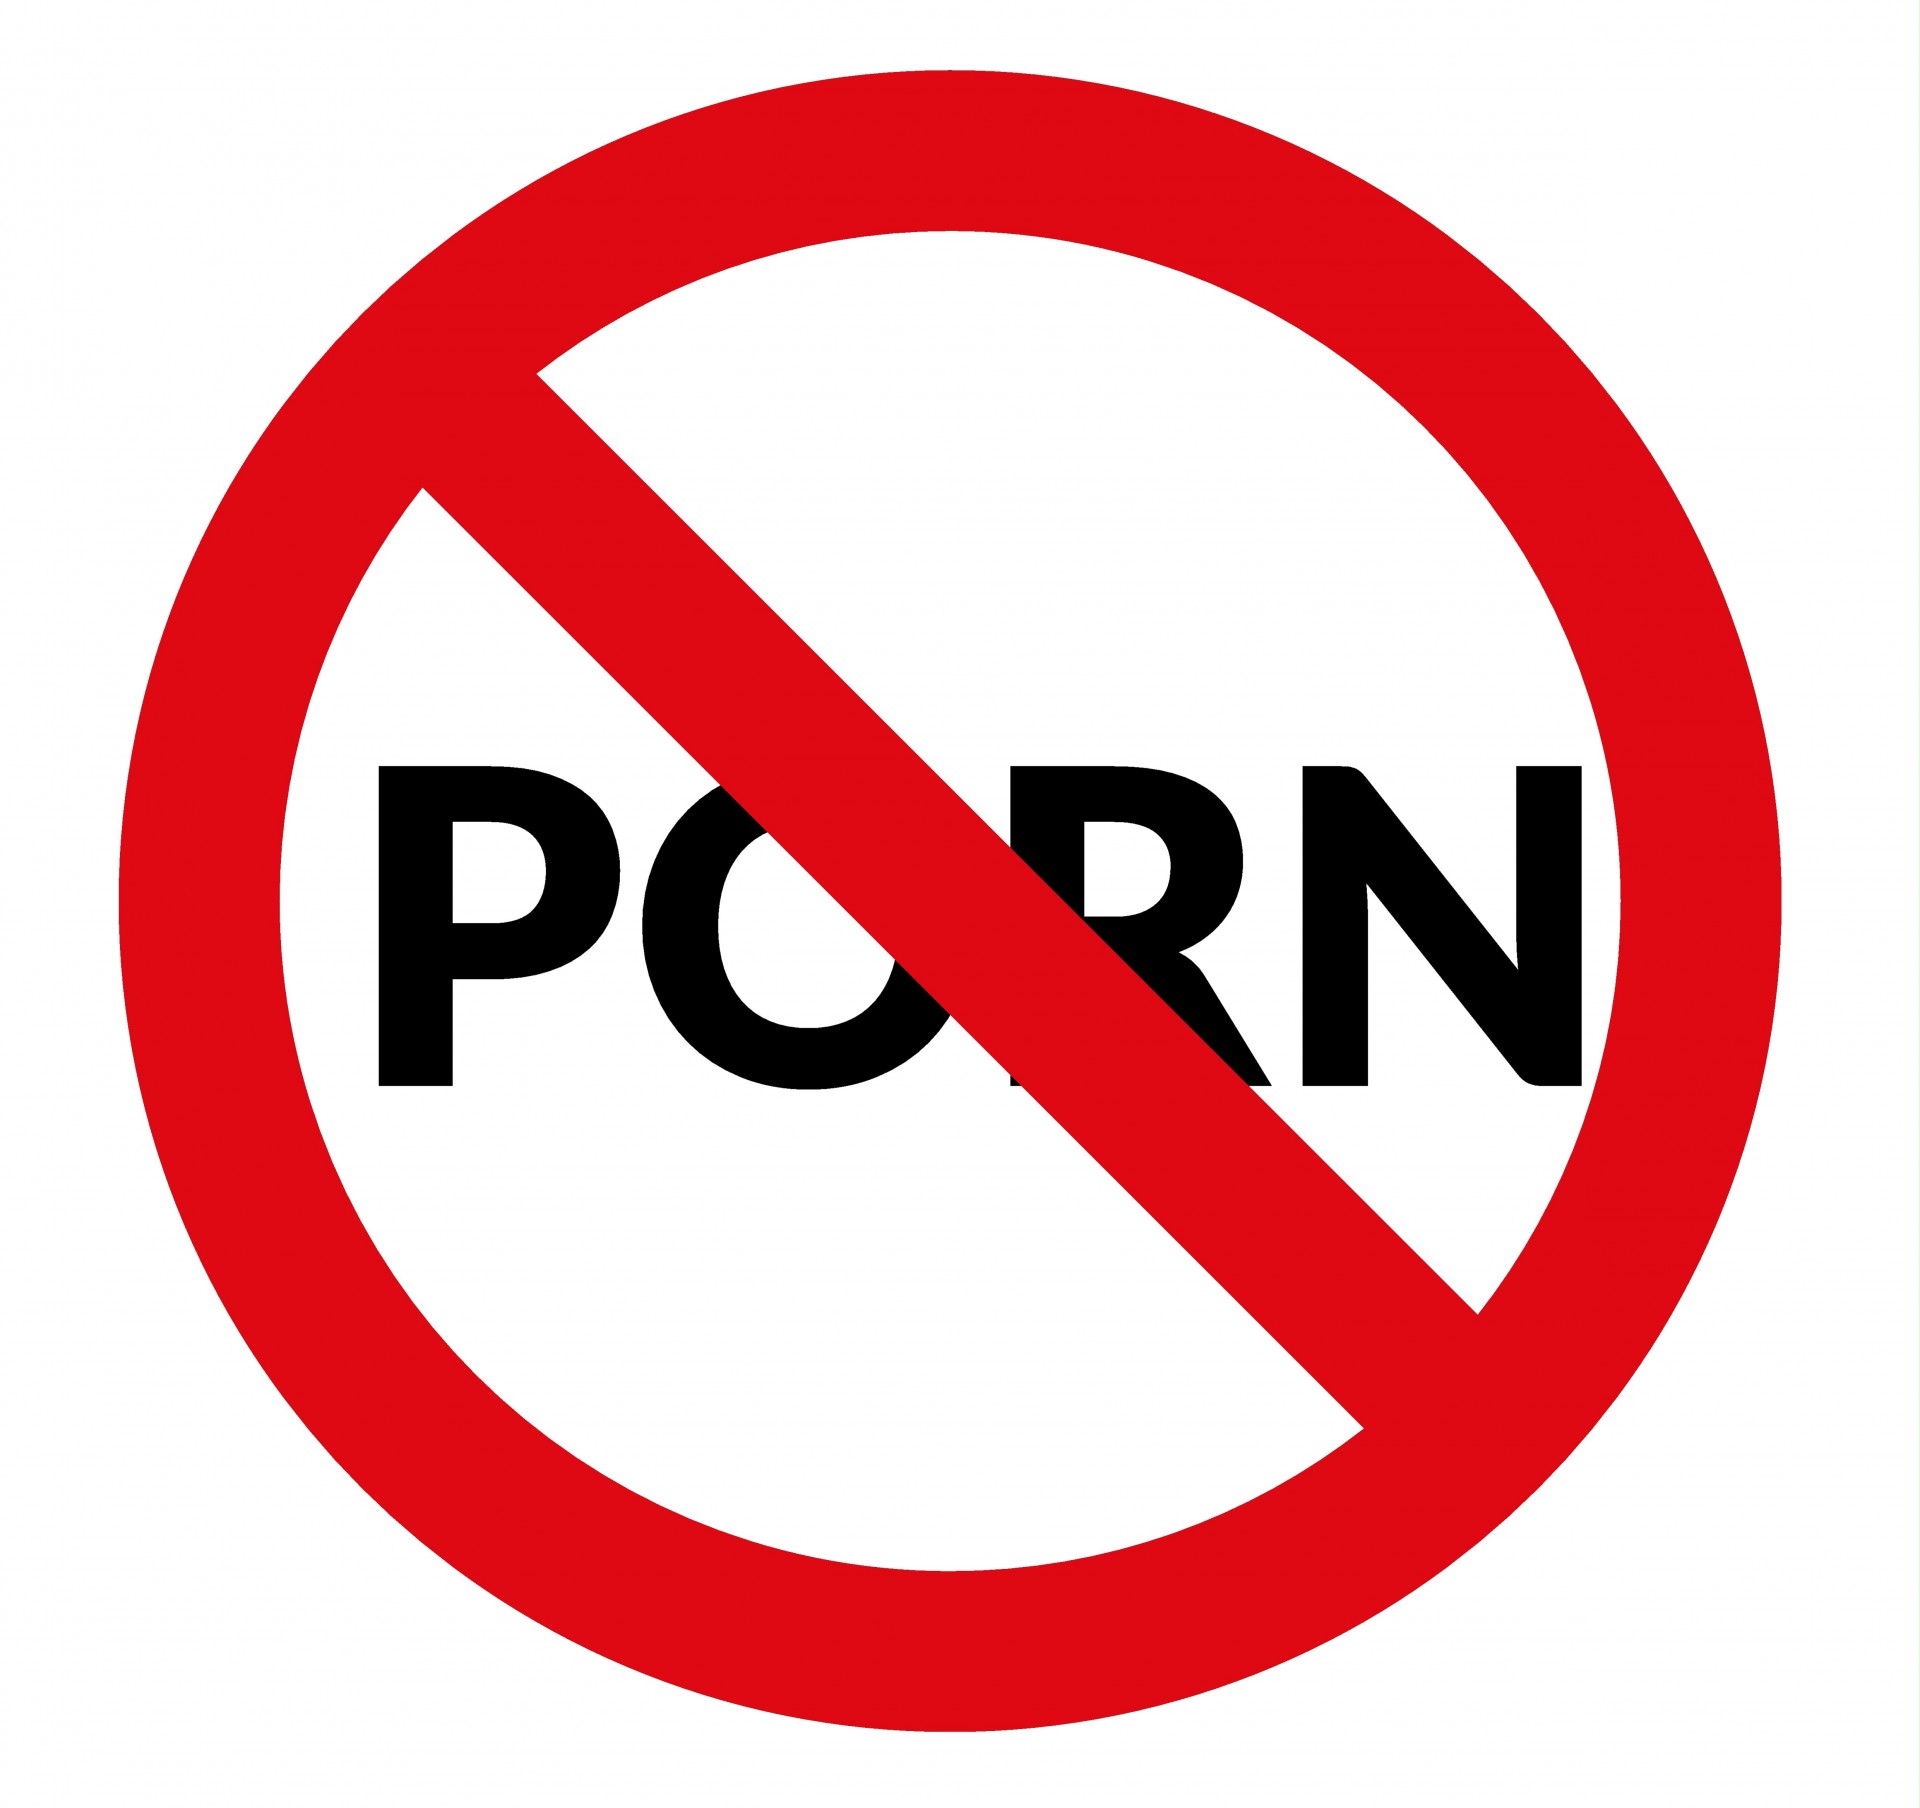 No Porn - sinal de aviso